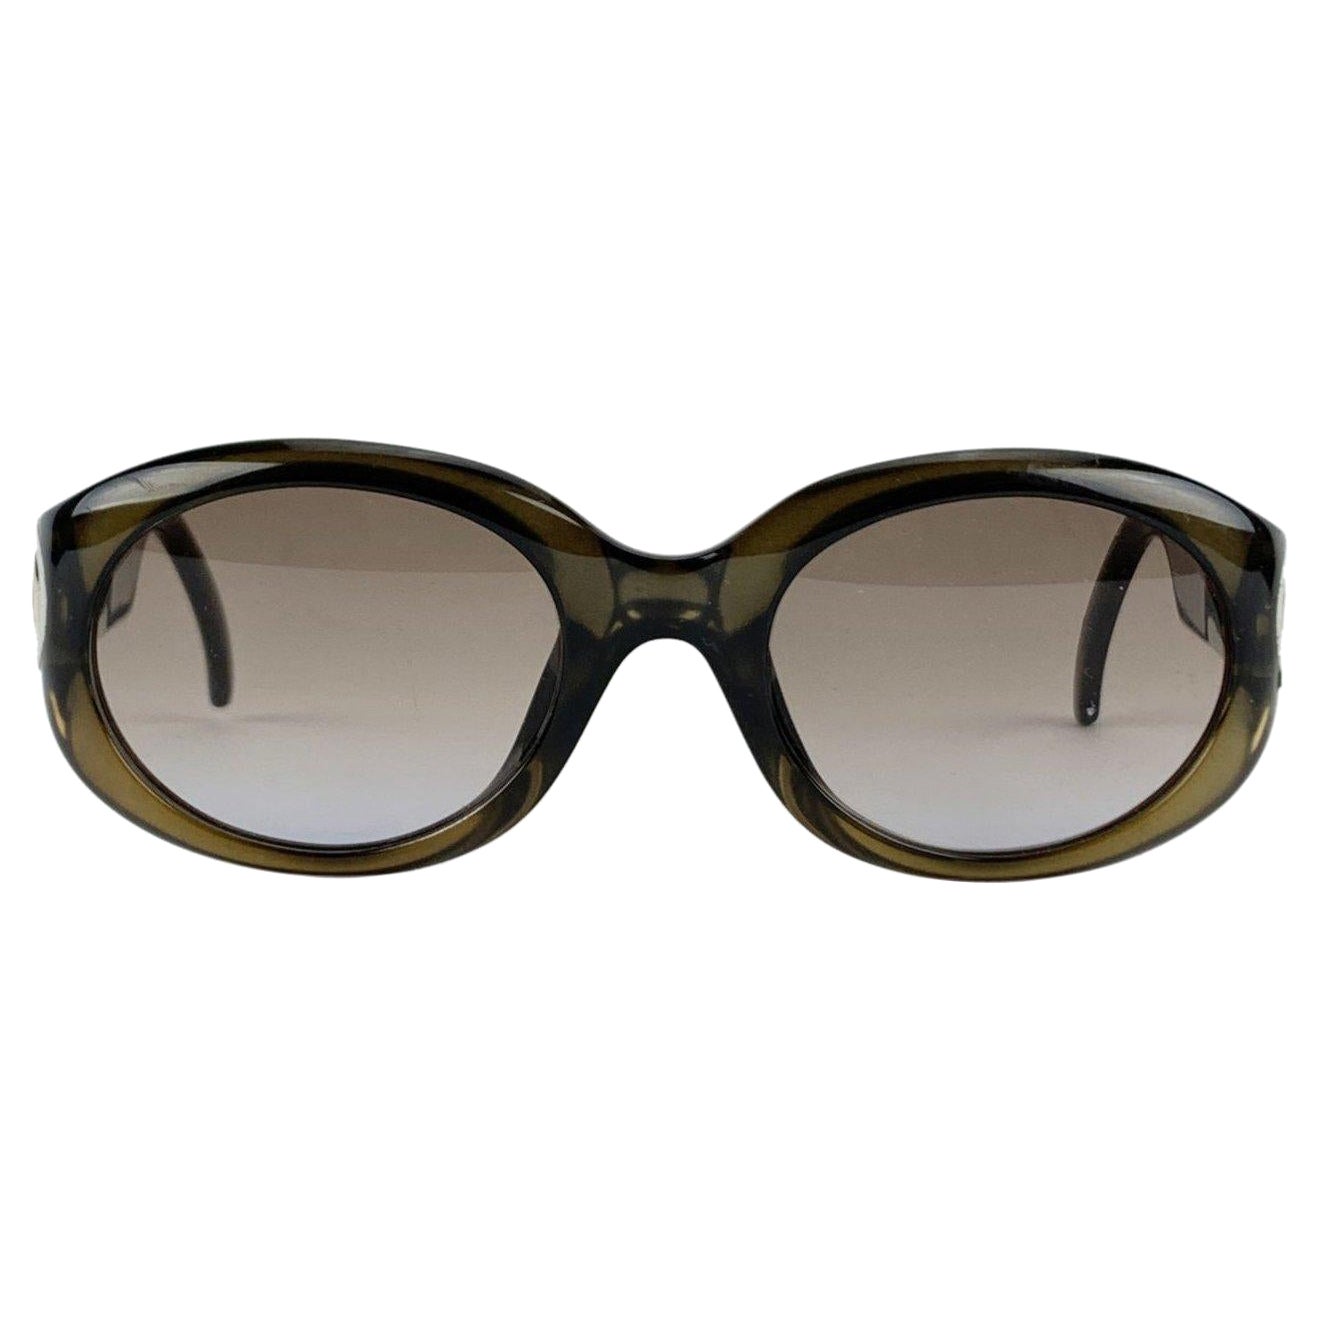 Christian Dior Vintage Dioramal 21 Y Sunglasses 53/21 140 mm